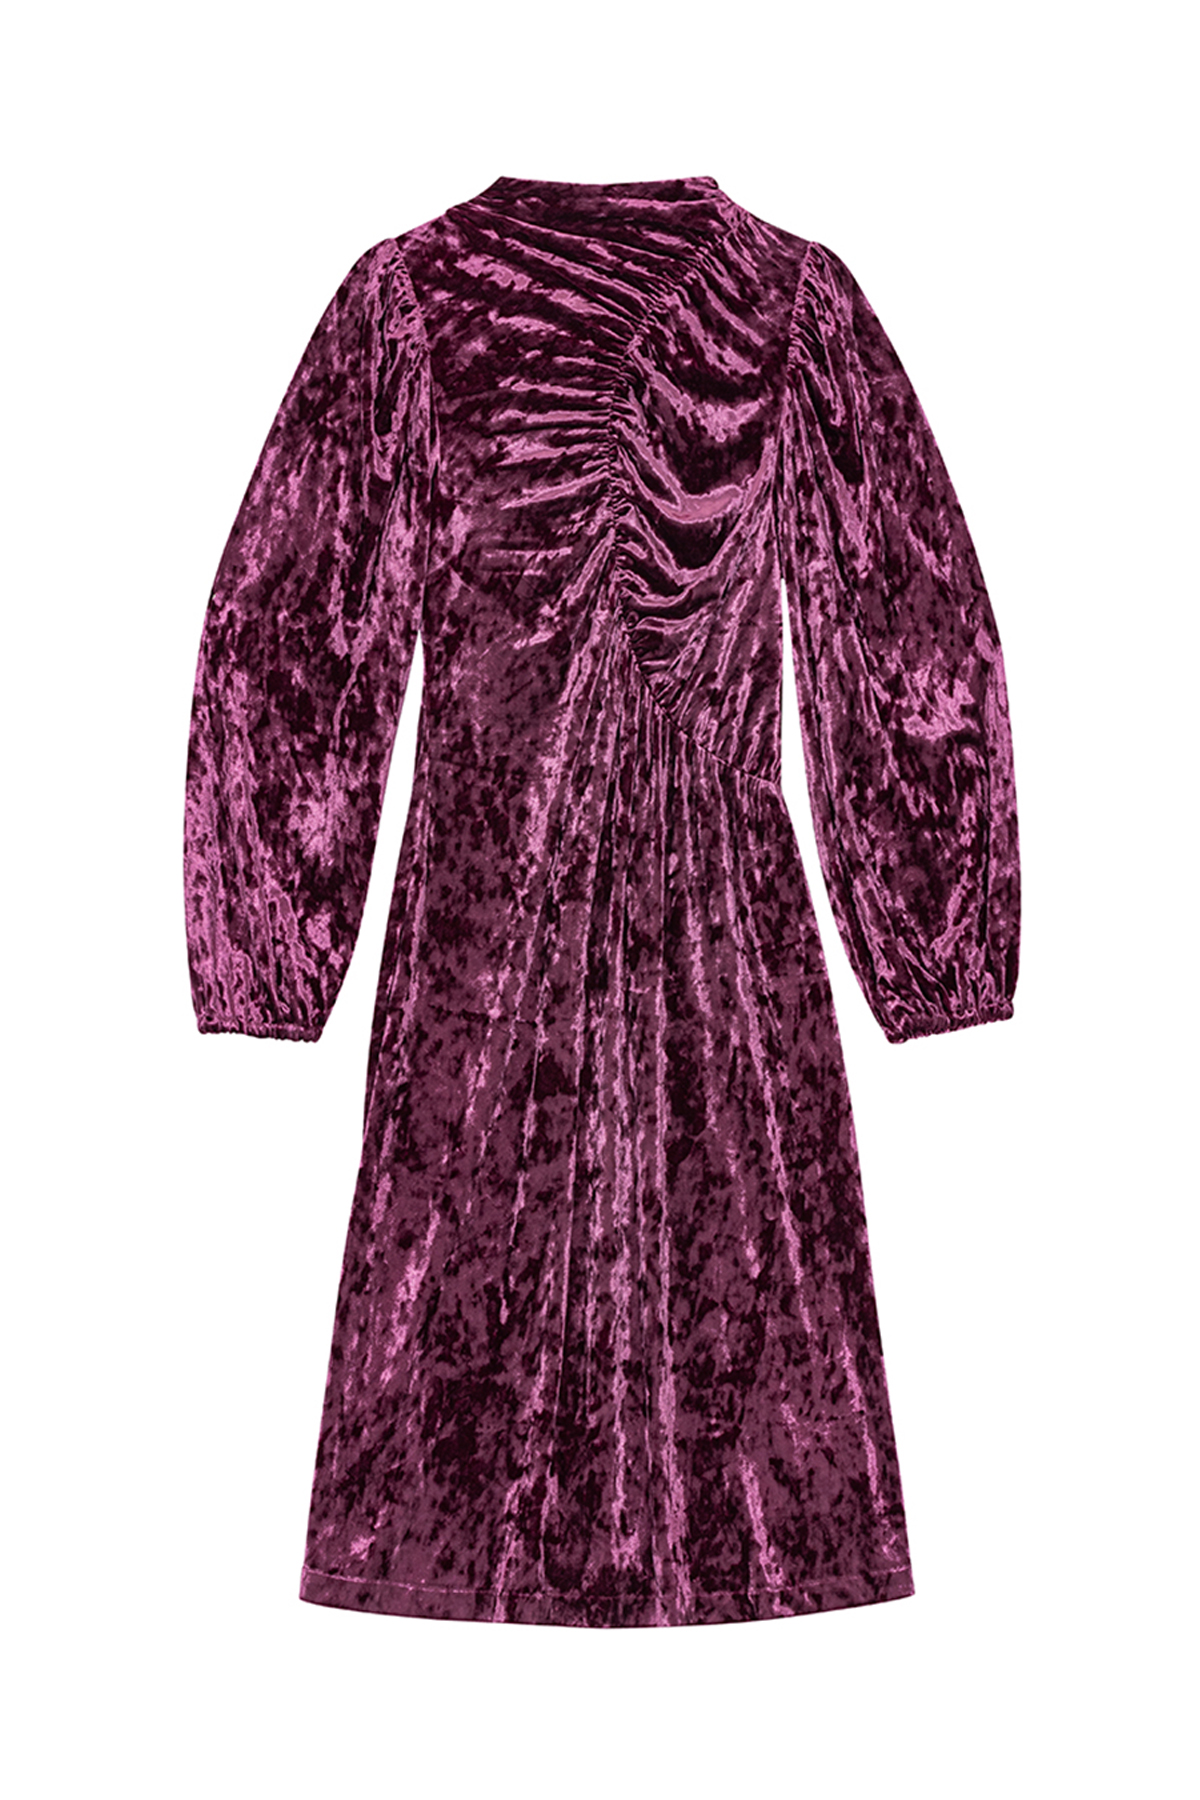 Hofmann Copenhagen Fabienne Dress - Ruby Star Velvet